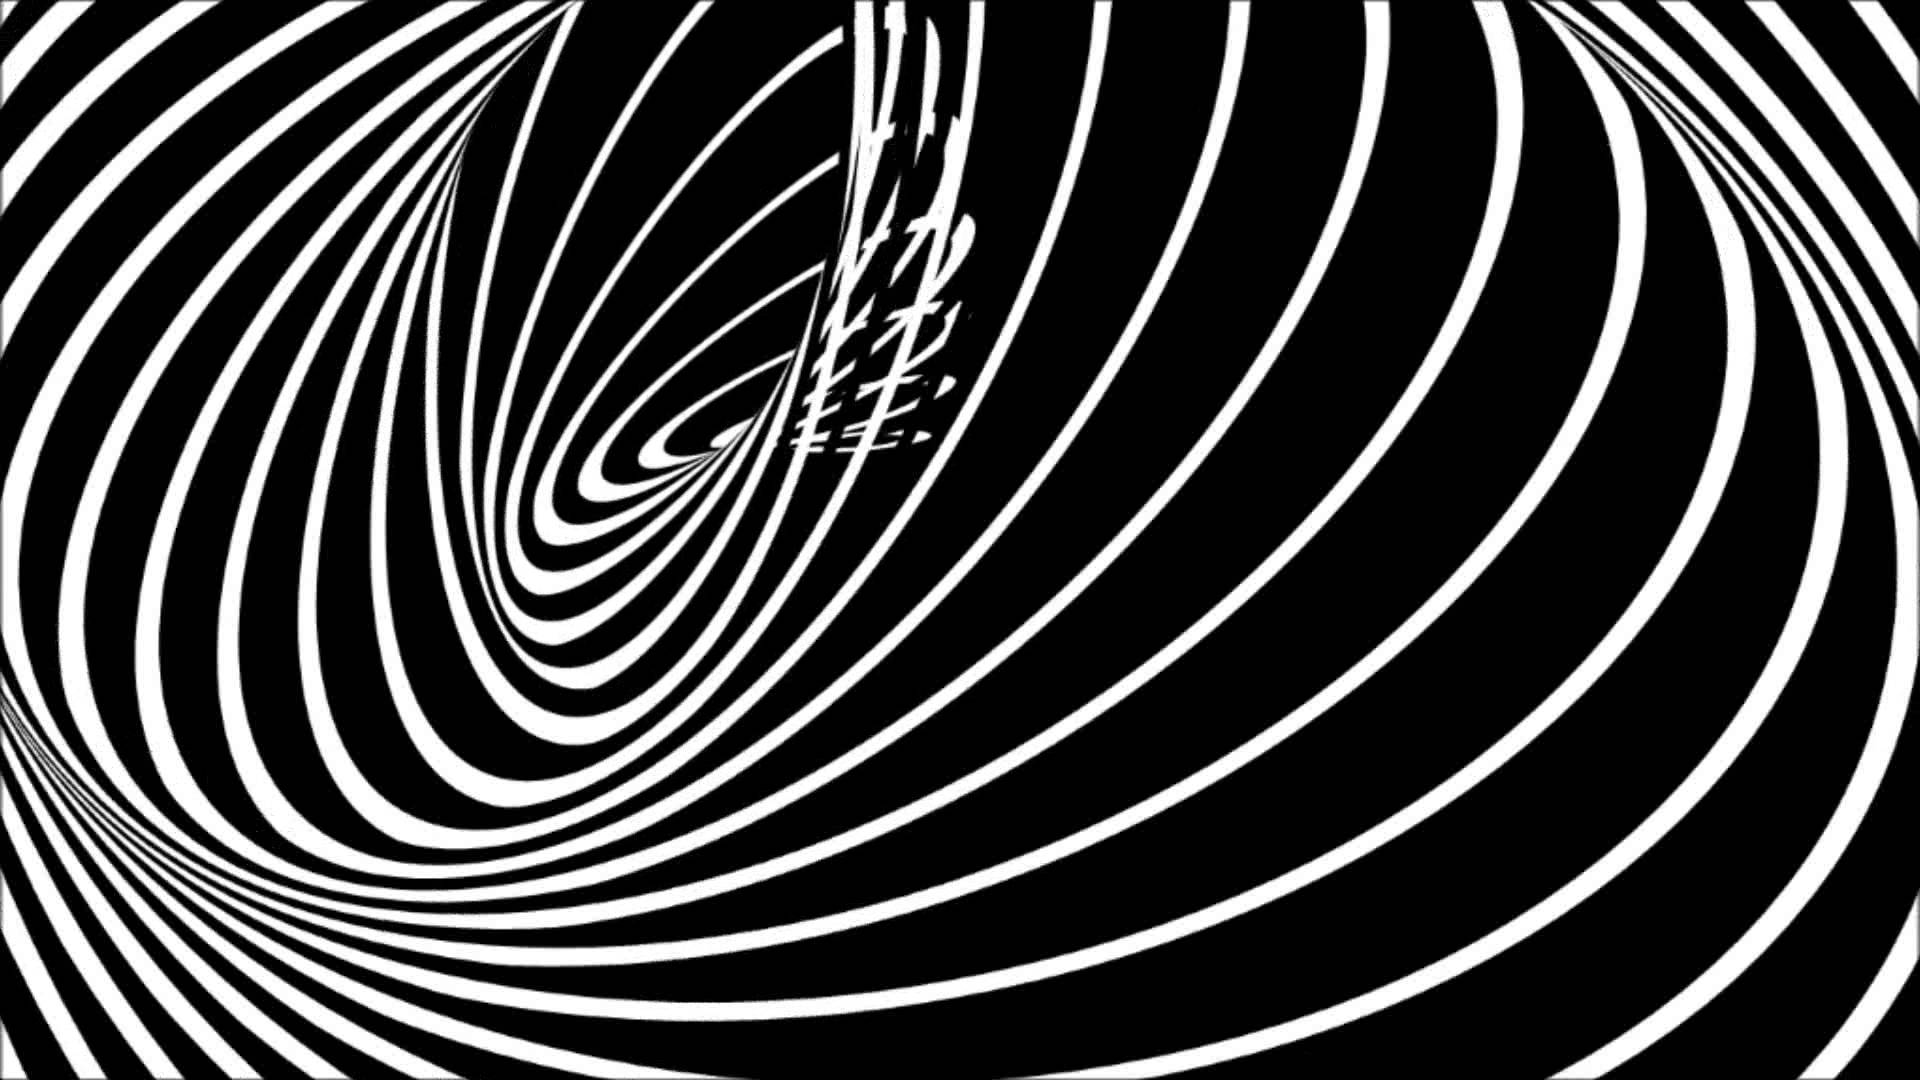 Tunnel Illusion wallpaper, Abstract, HQ Tunnel Illusion picture